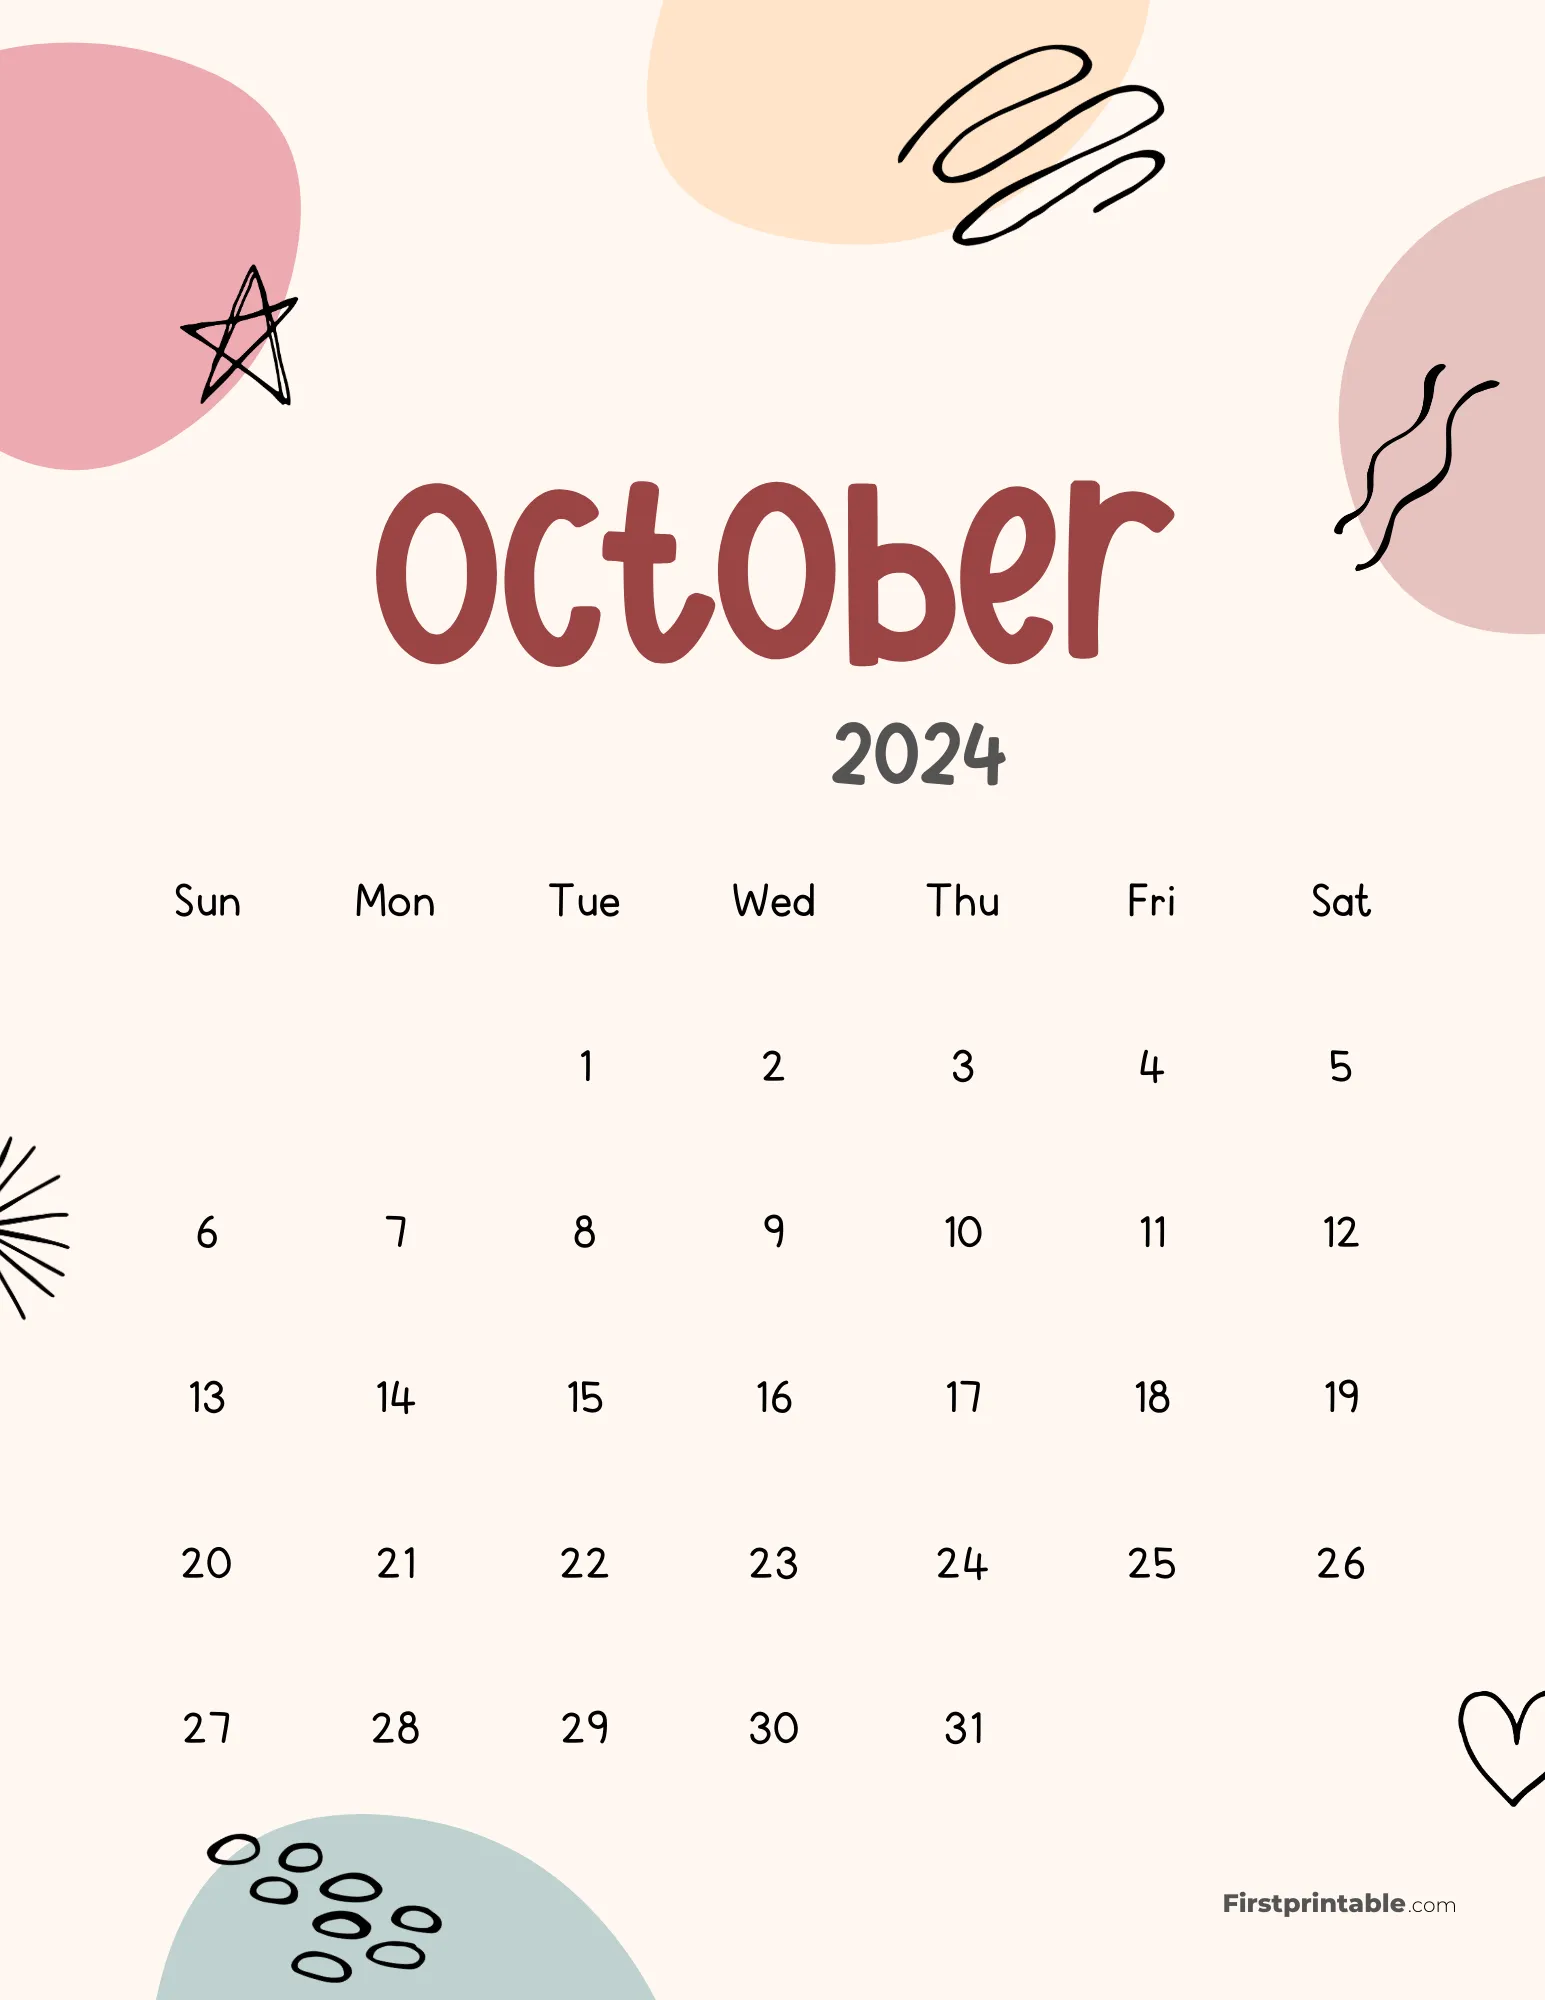 October 2024 Cute Abstract Calendar - Aesthetic Design